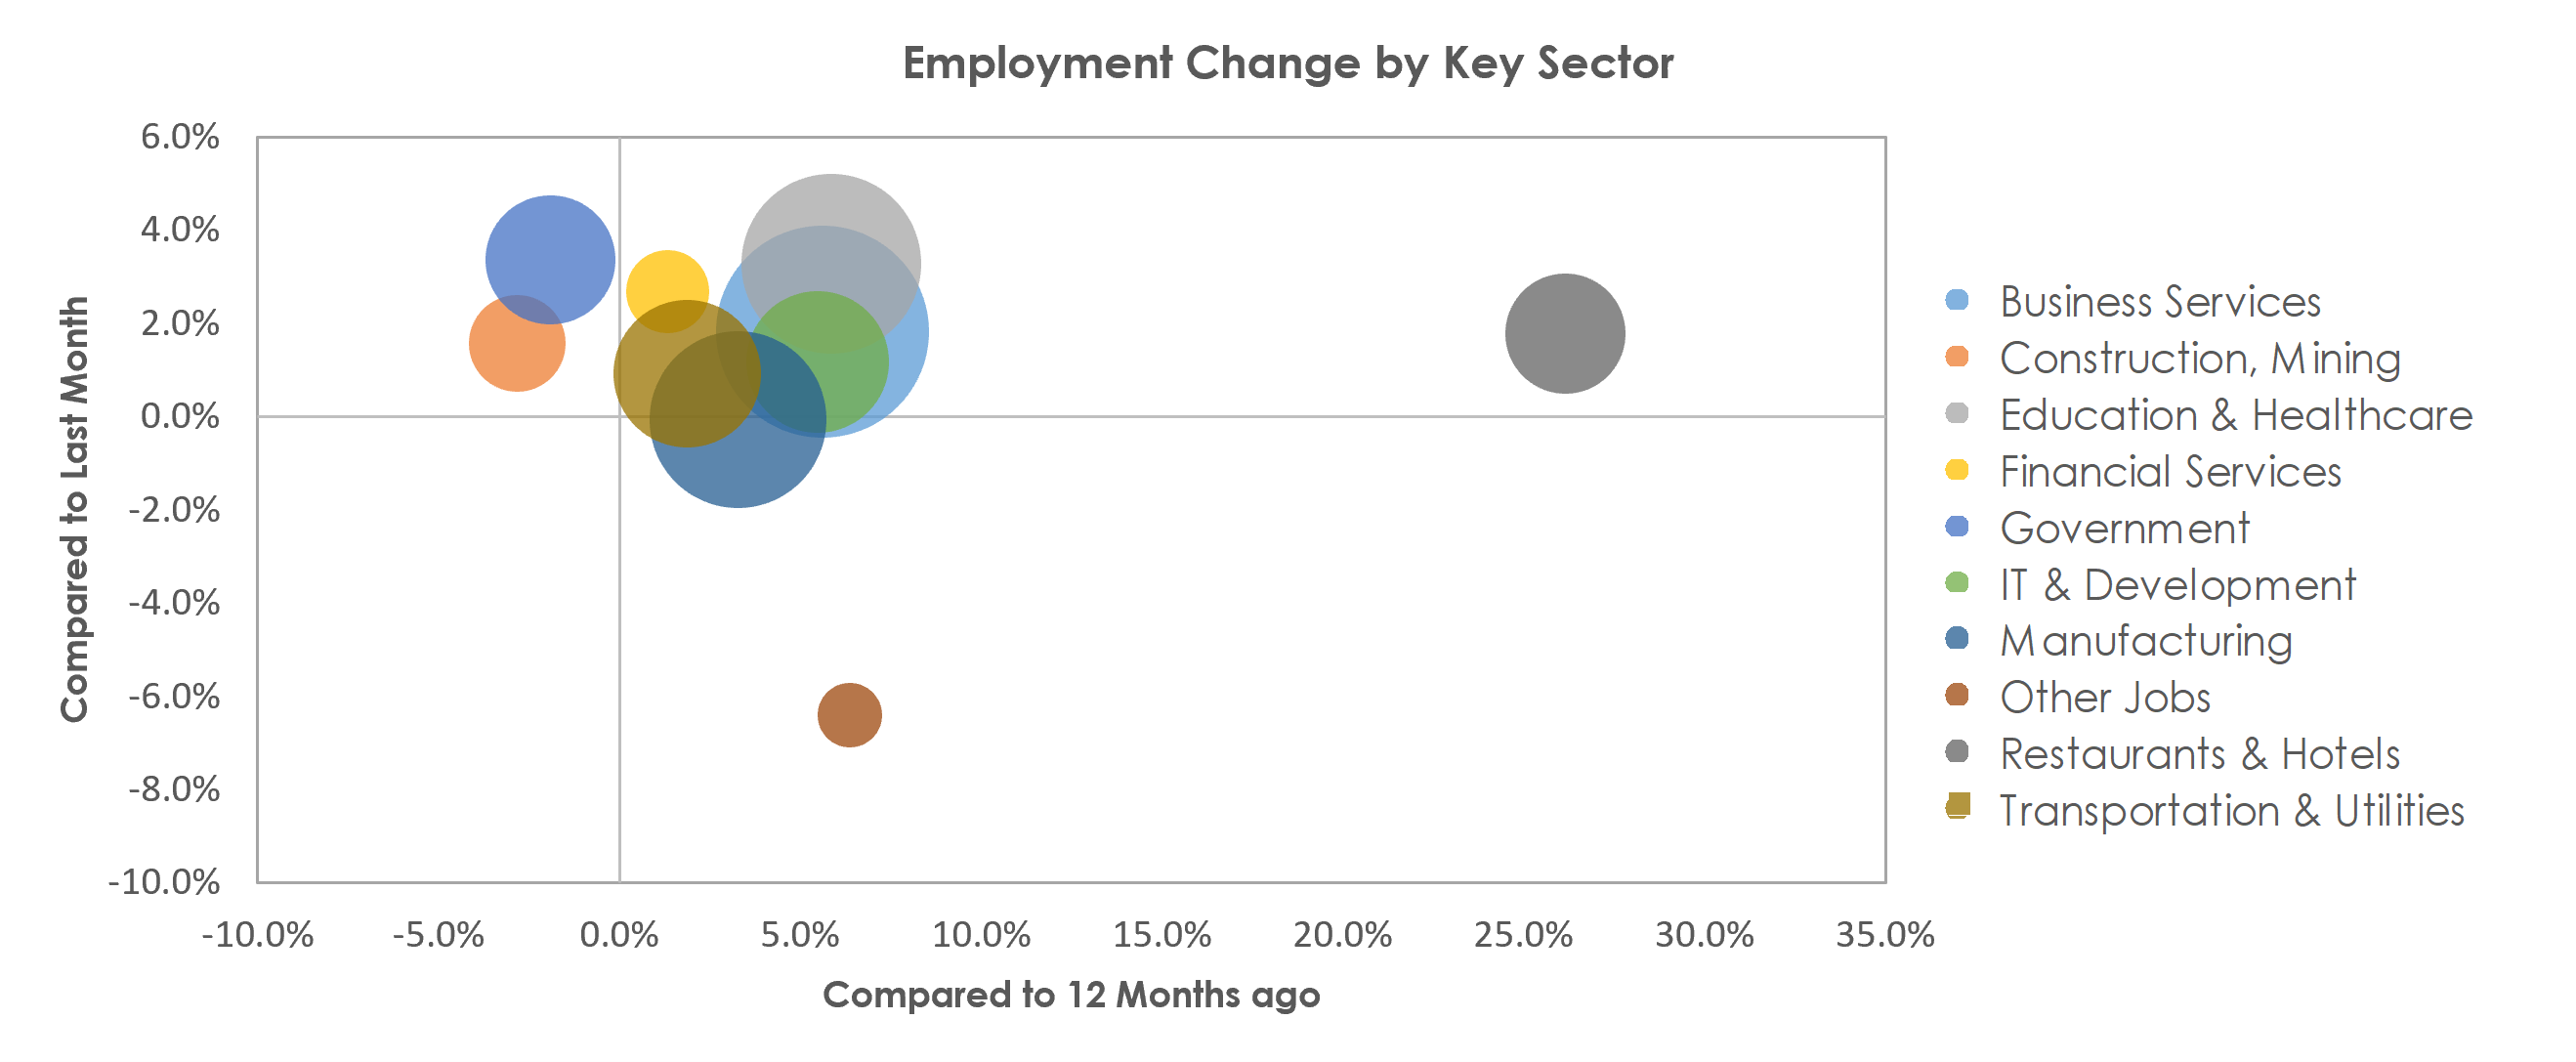 San Jose-Sunnyvale-Santa Clara, CA Unemployment by Industry October 2021